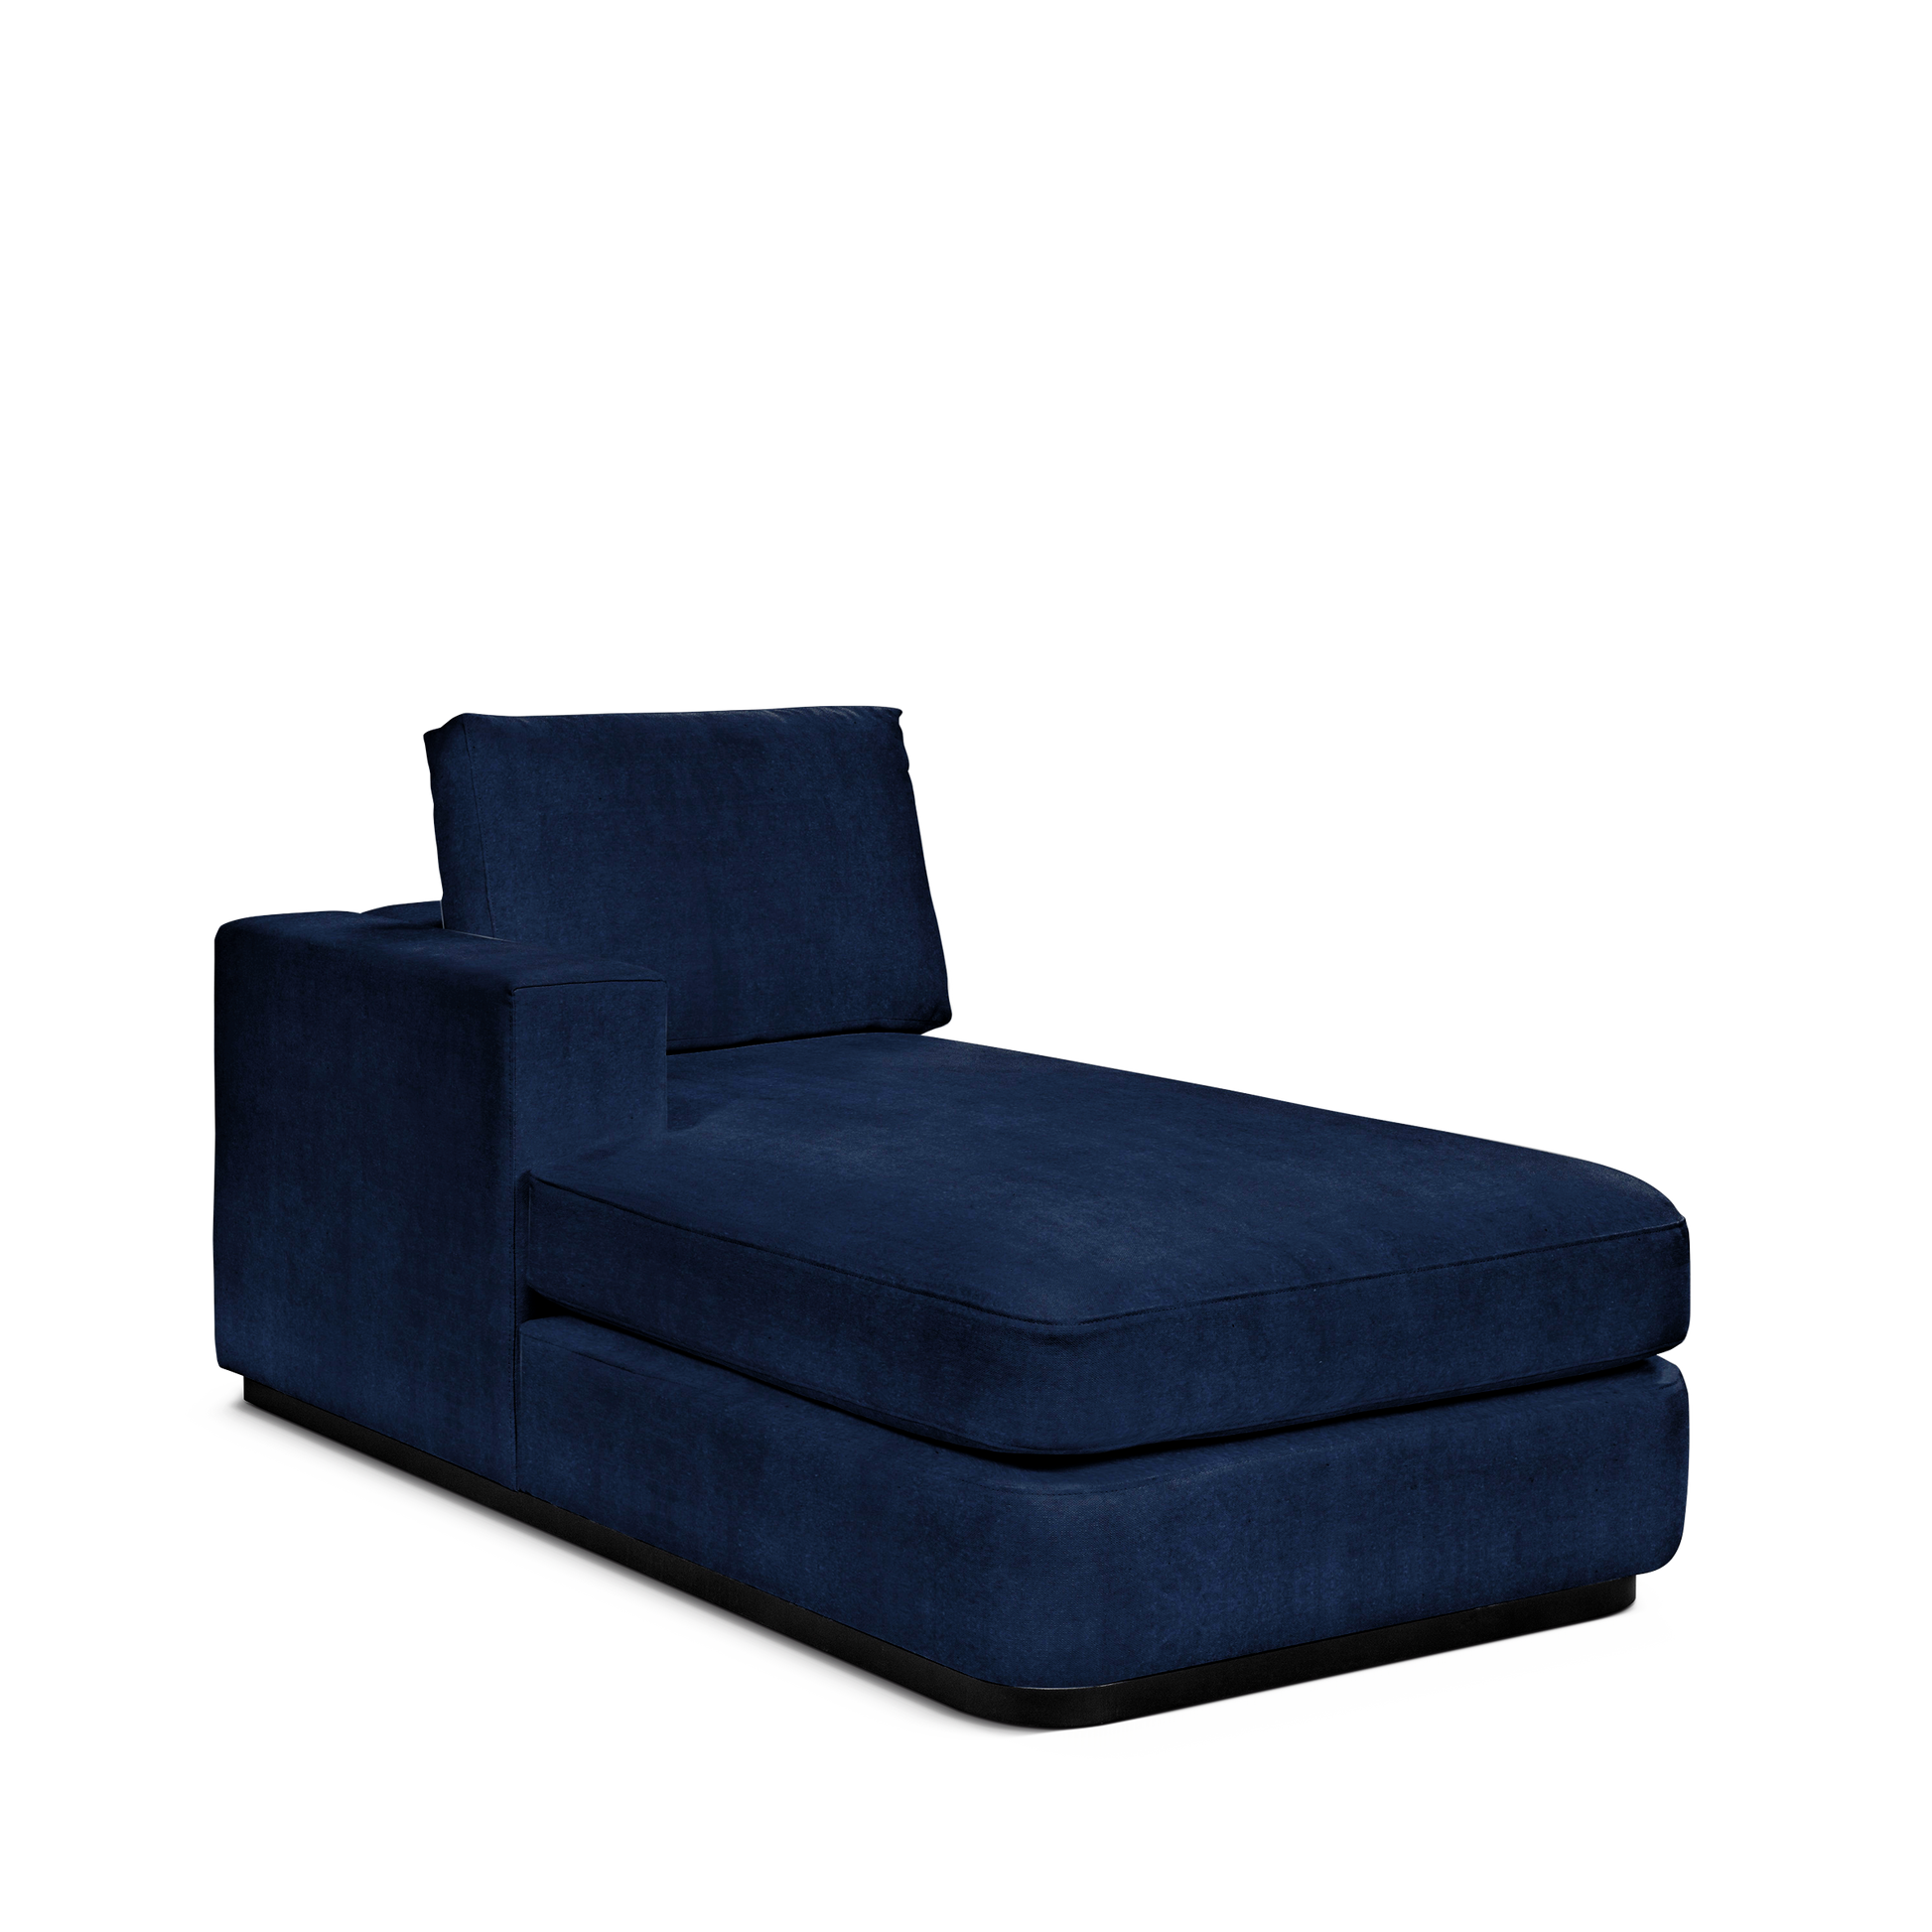 ATLAS 90 Lounge Bed arm rest left with London dark blue textile